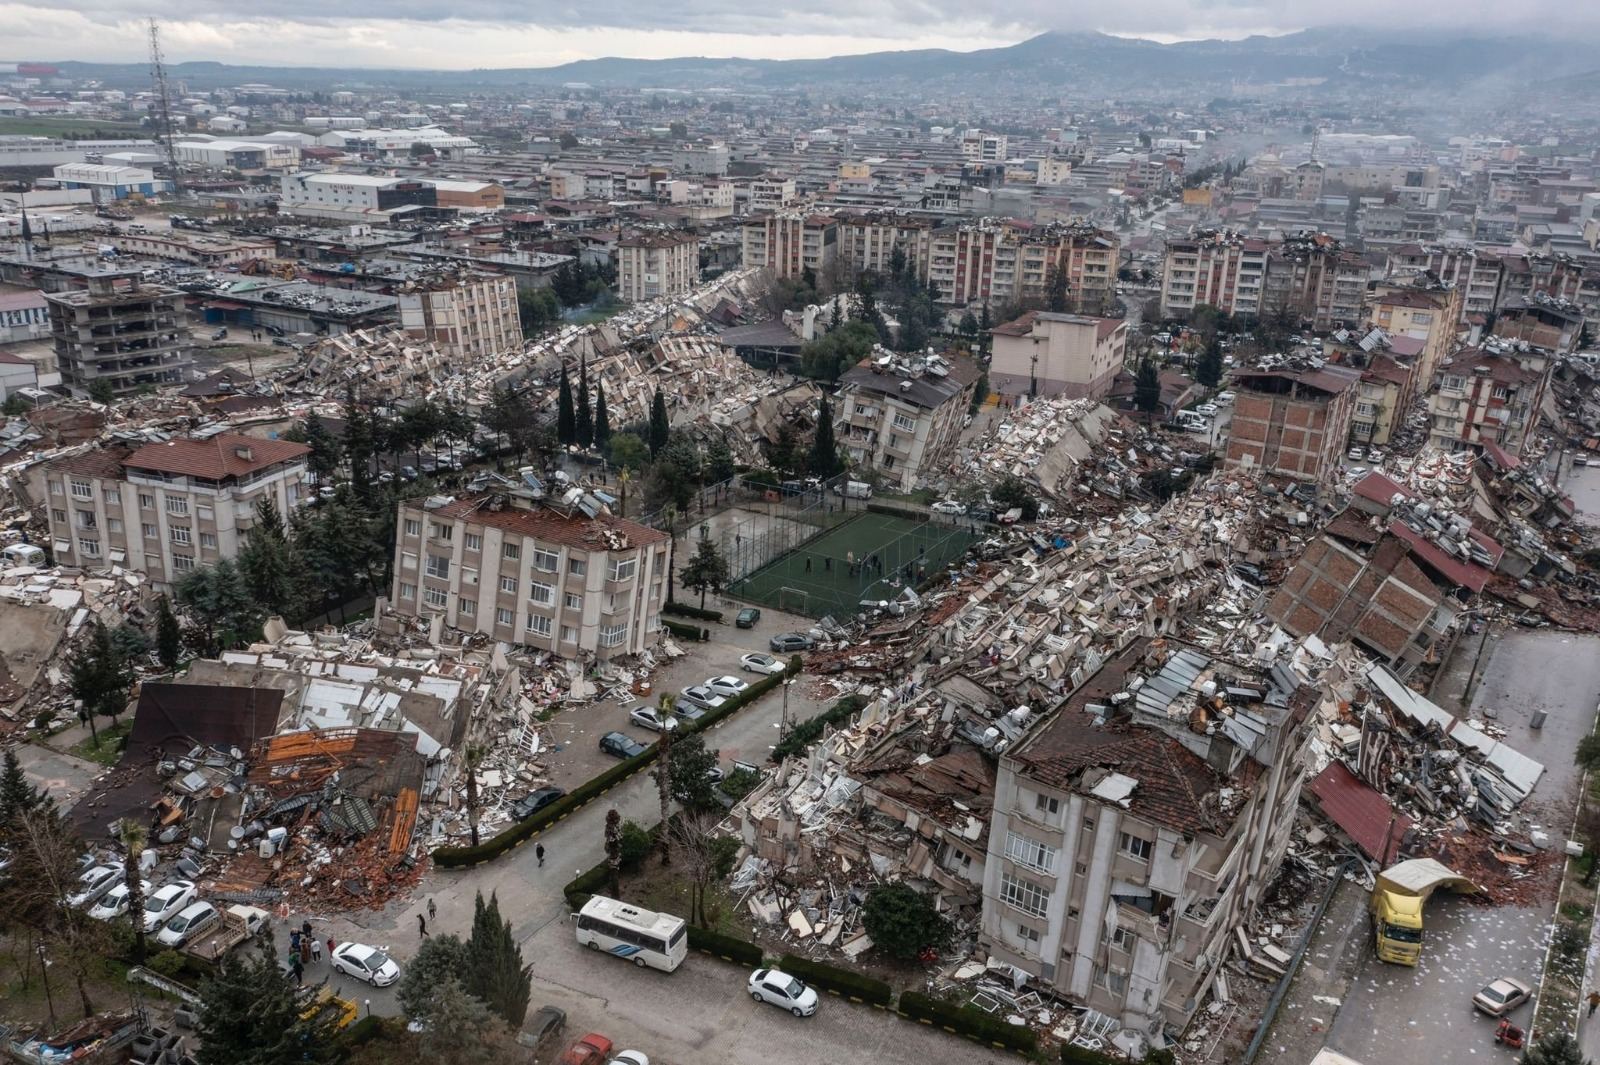 Türkiye earthquake death toll reaches 3,381